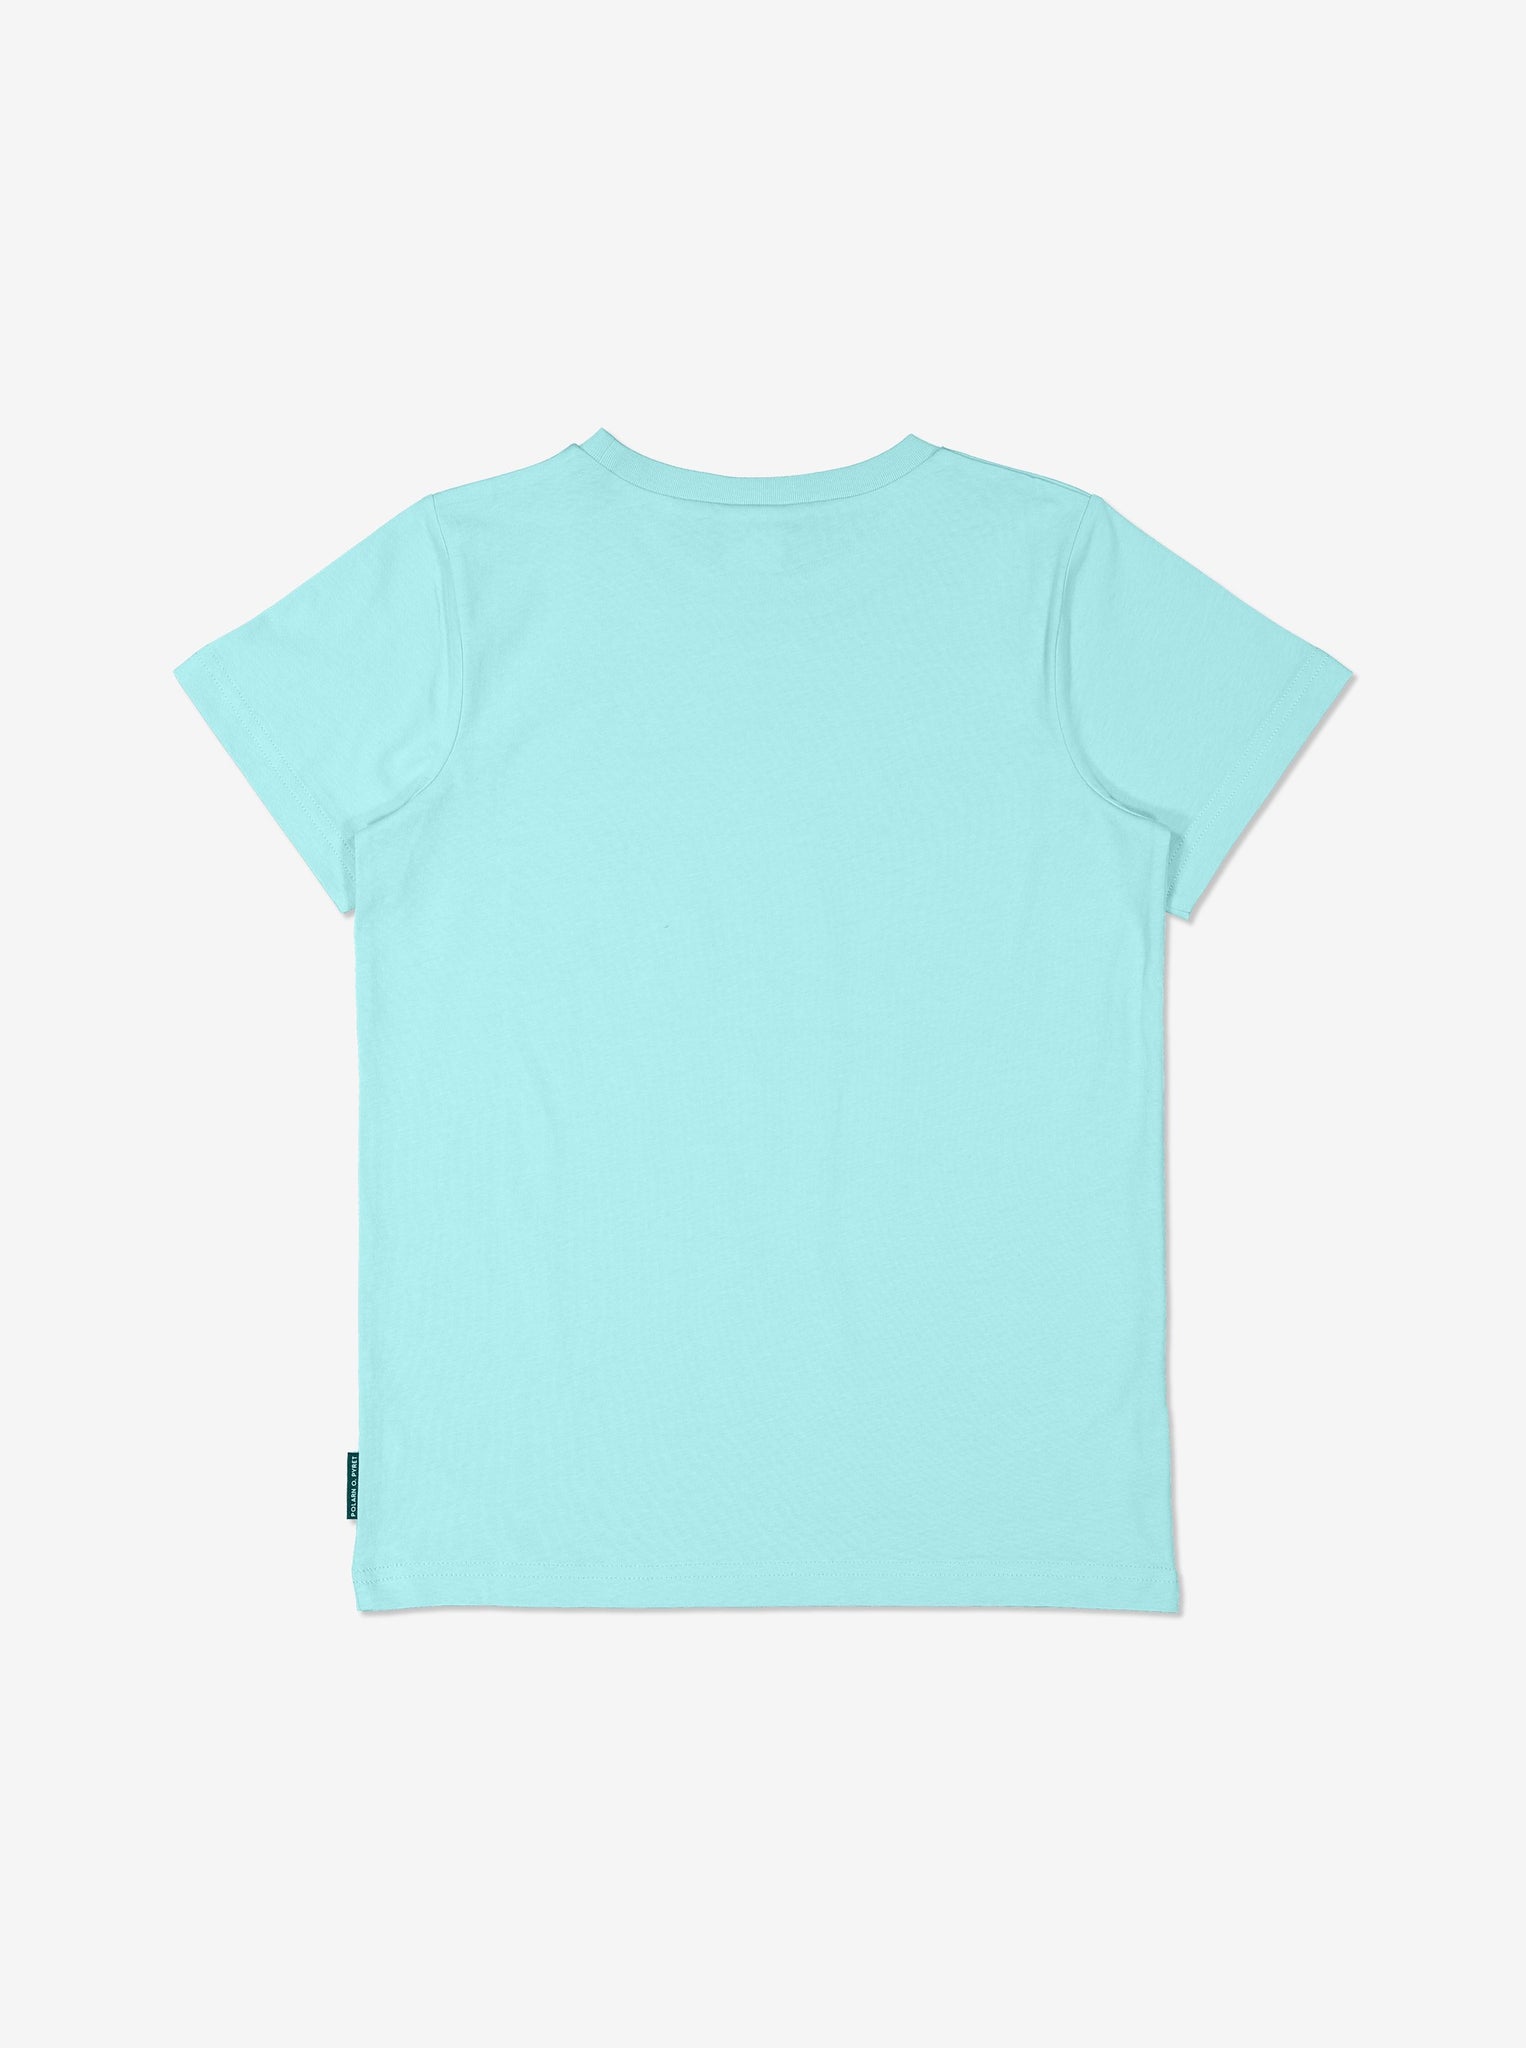 Boys Blue Kids GOTS Organic T Shirt 